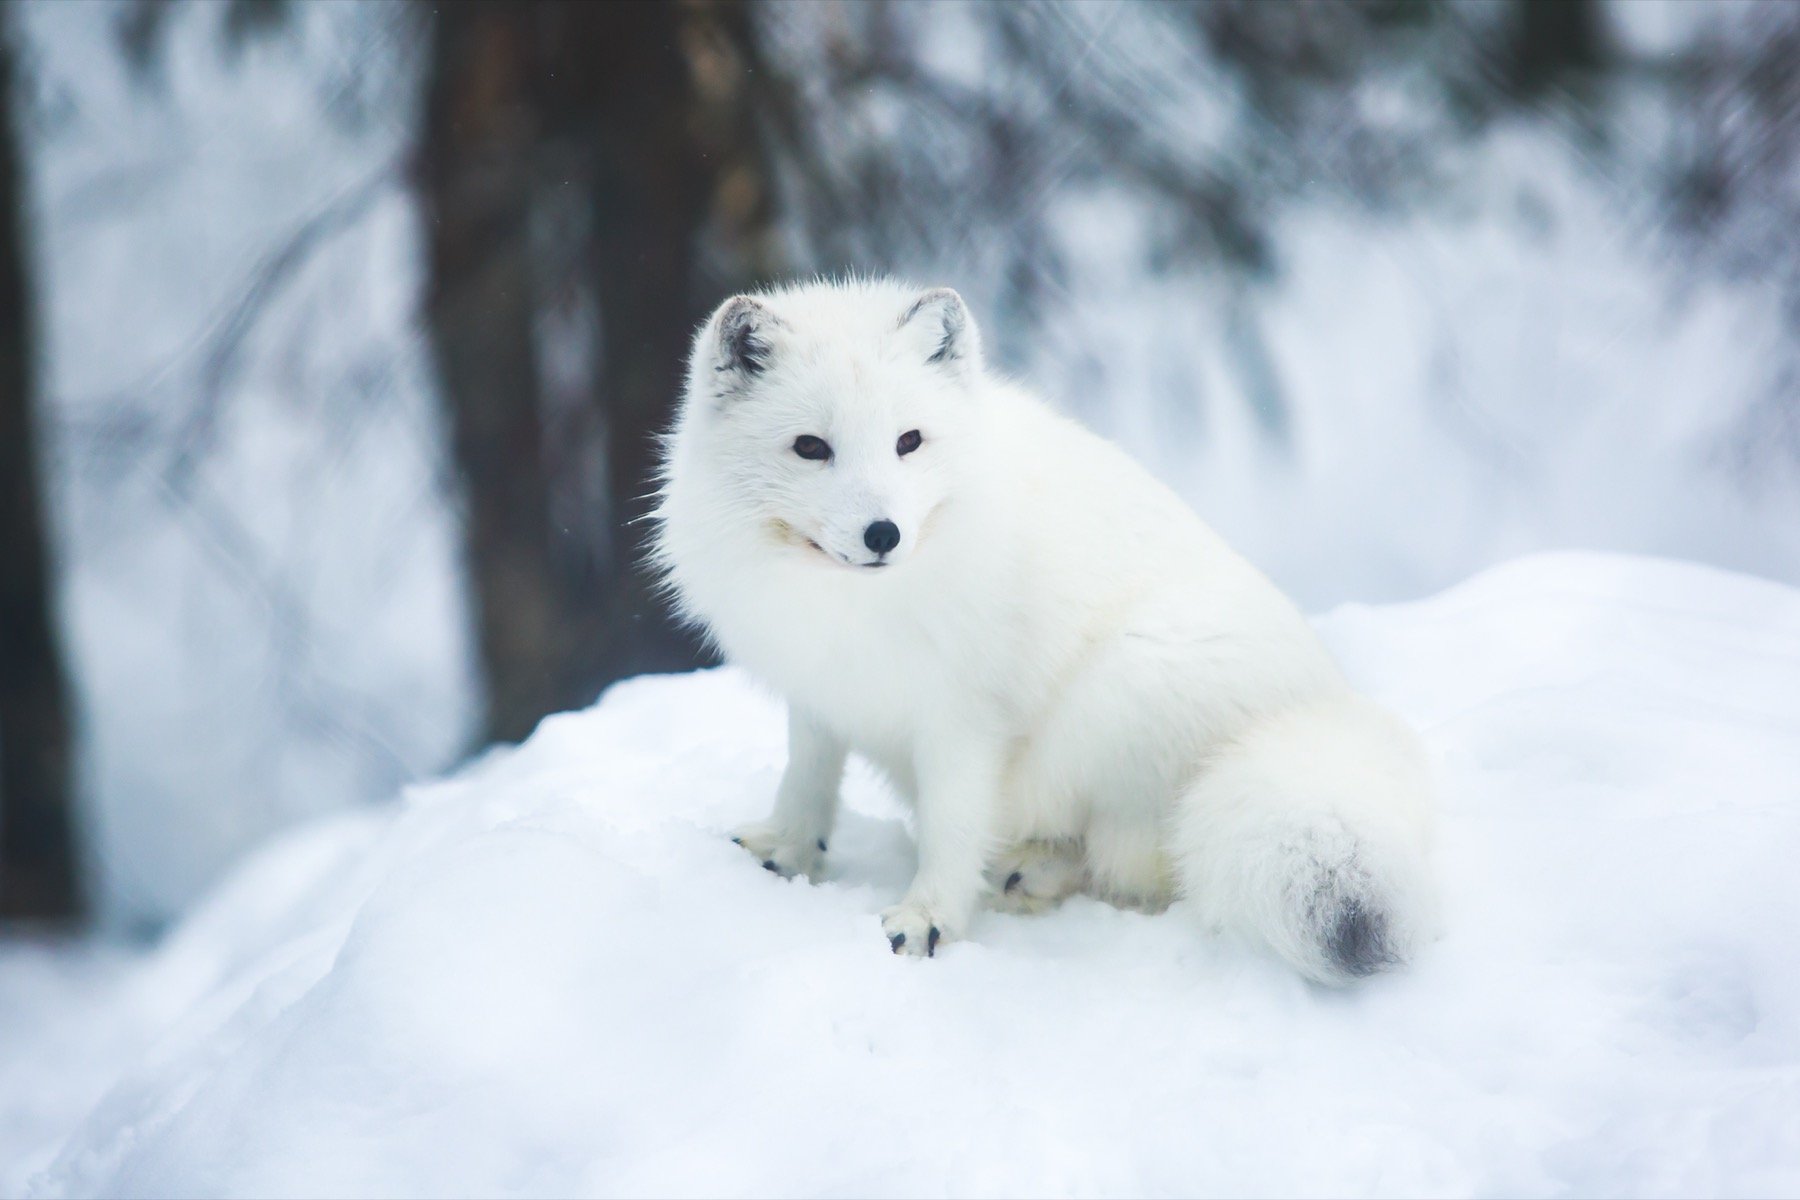 https://cdn.expeditions.com/globalassets/expedition-stories/wild-personalities-arctic-fox/arctic-fox-main.jpg